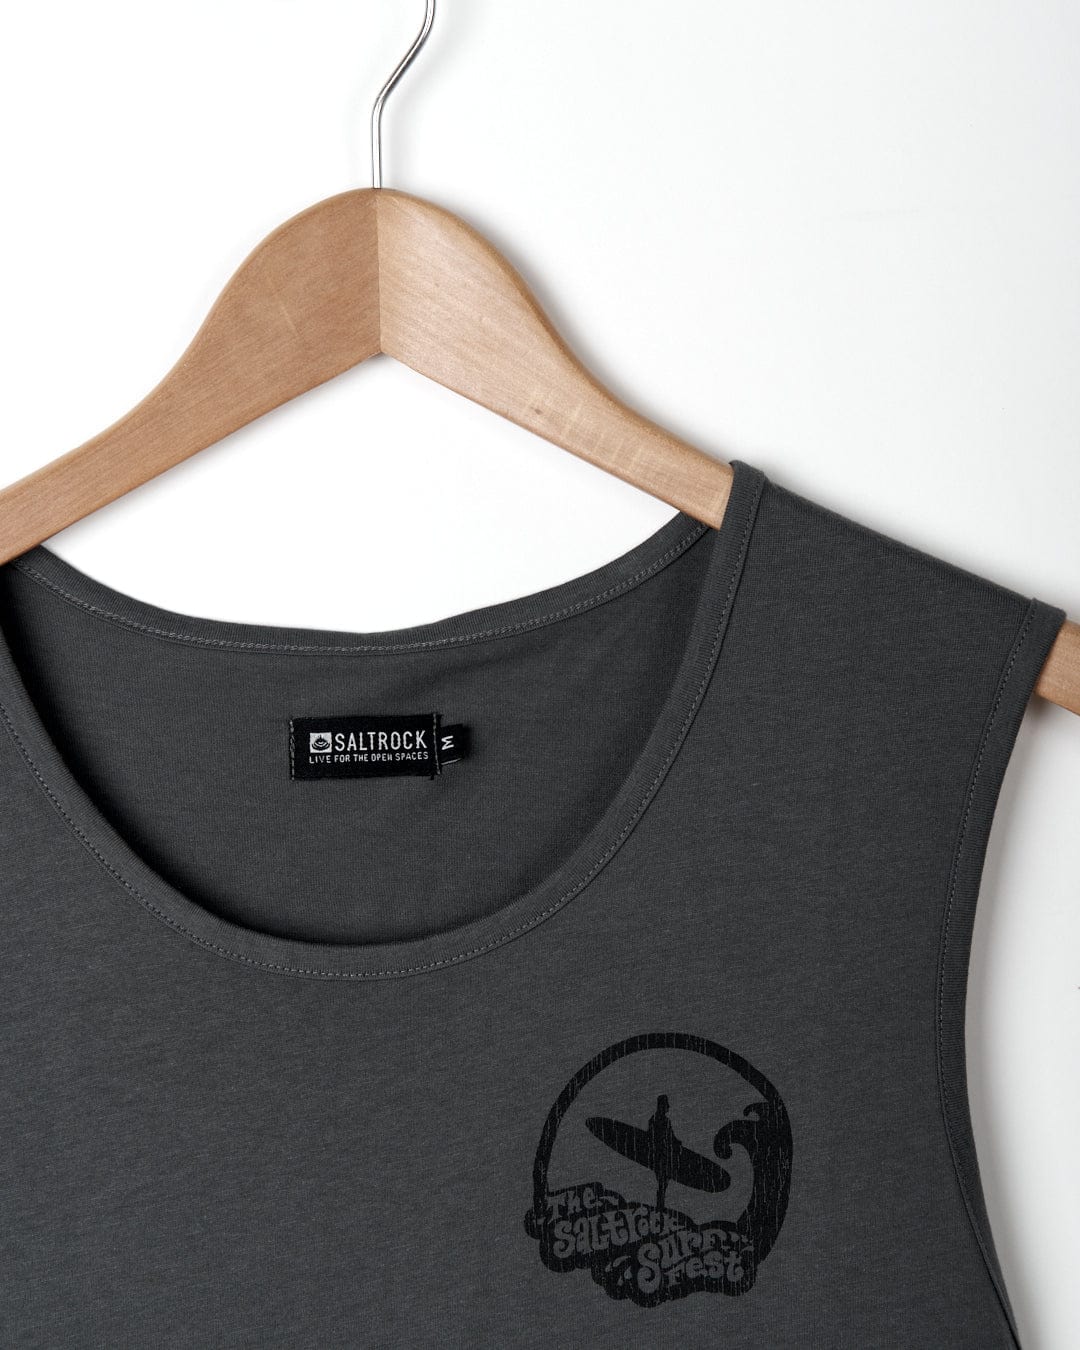 A Surf Fest - Mens Vest - Dark Grey with a distressed black logo on it by Saltrock.